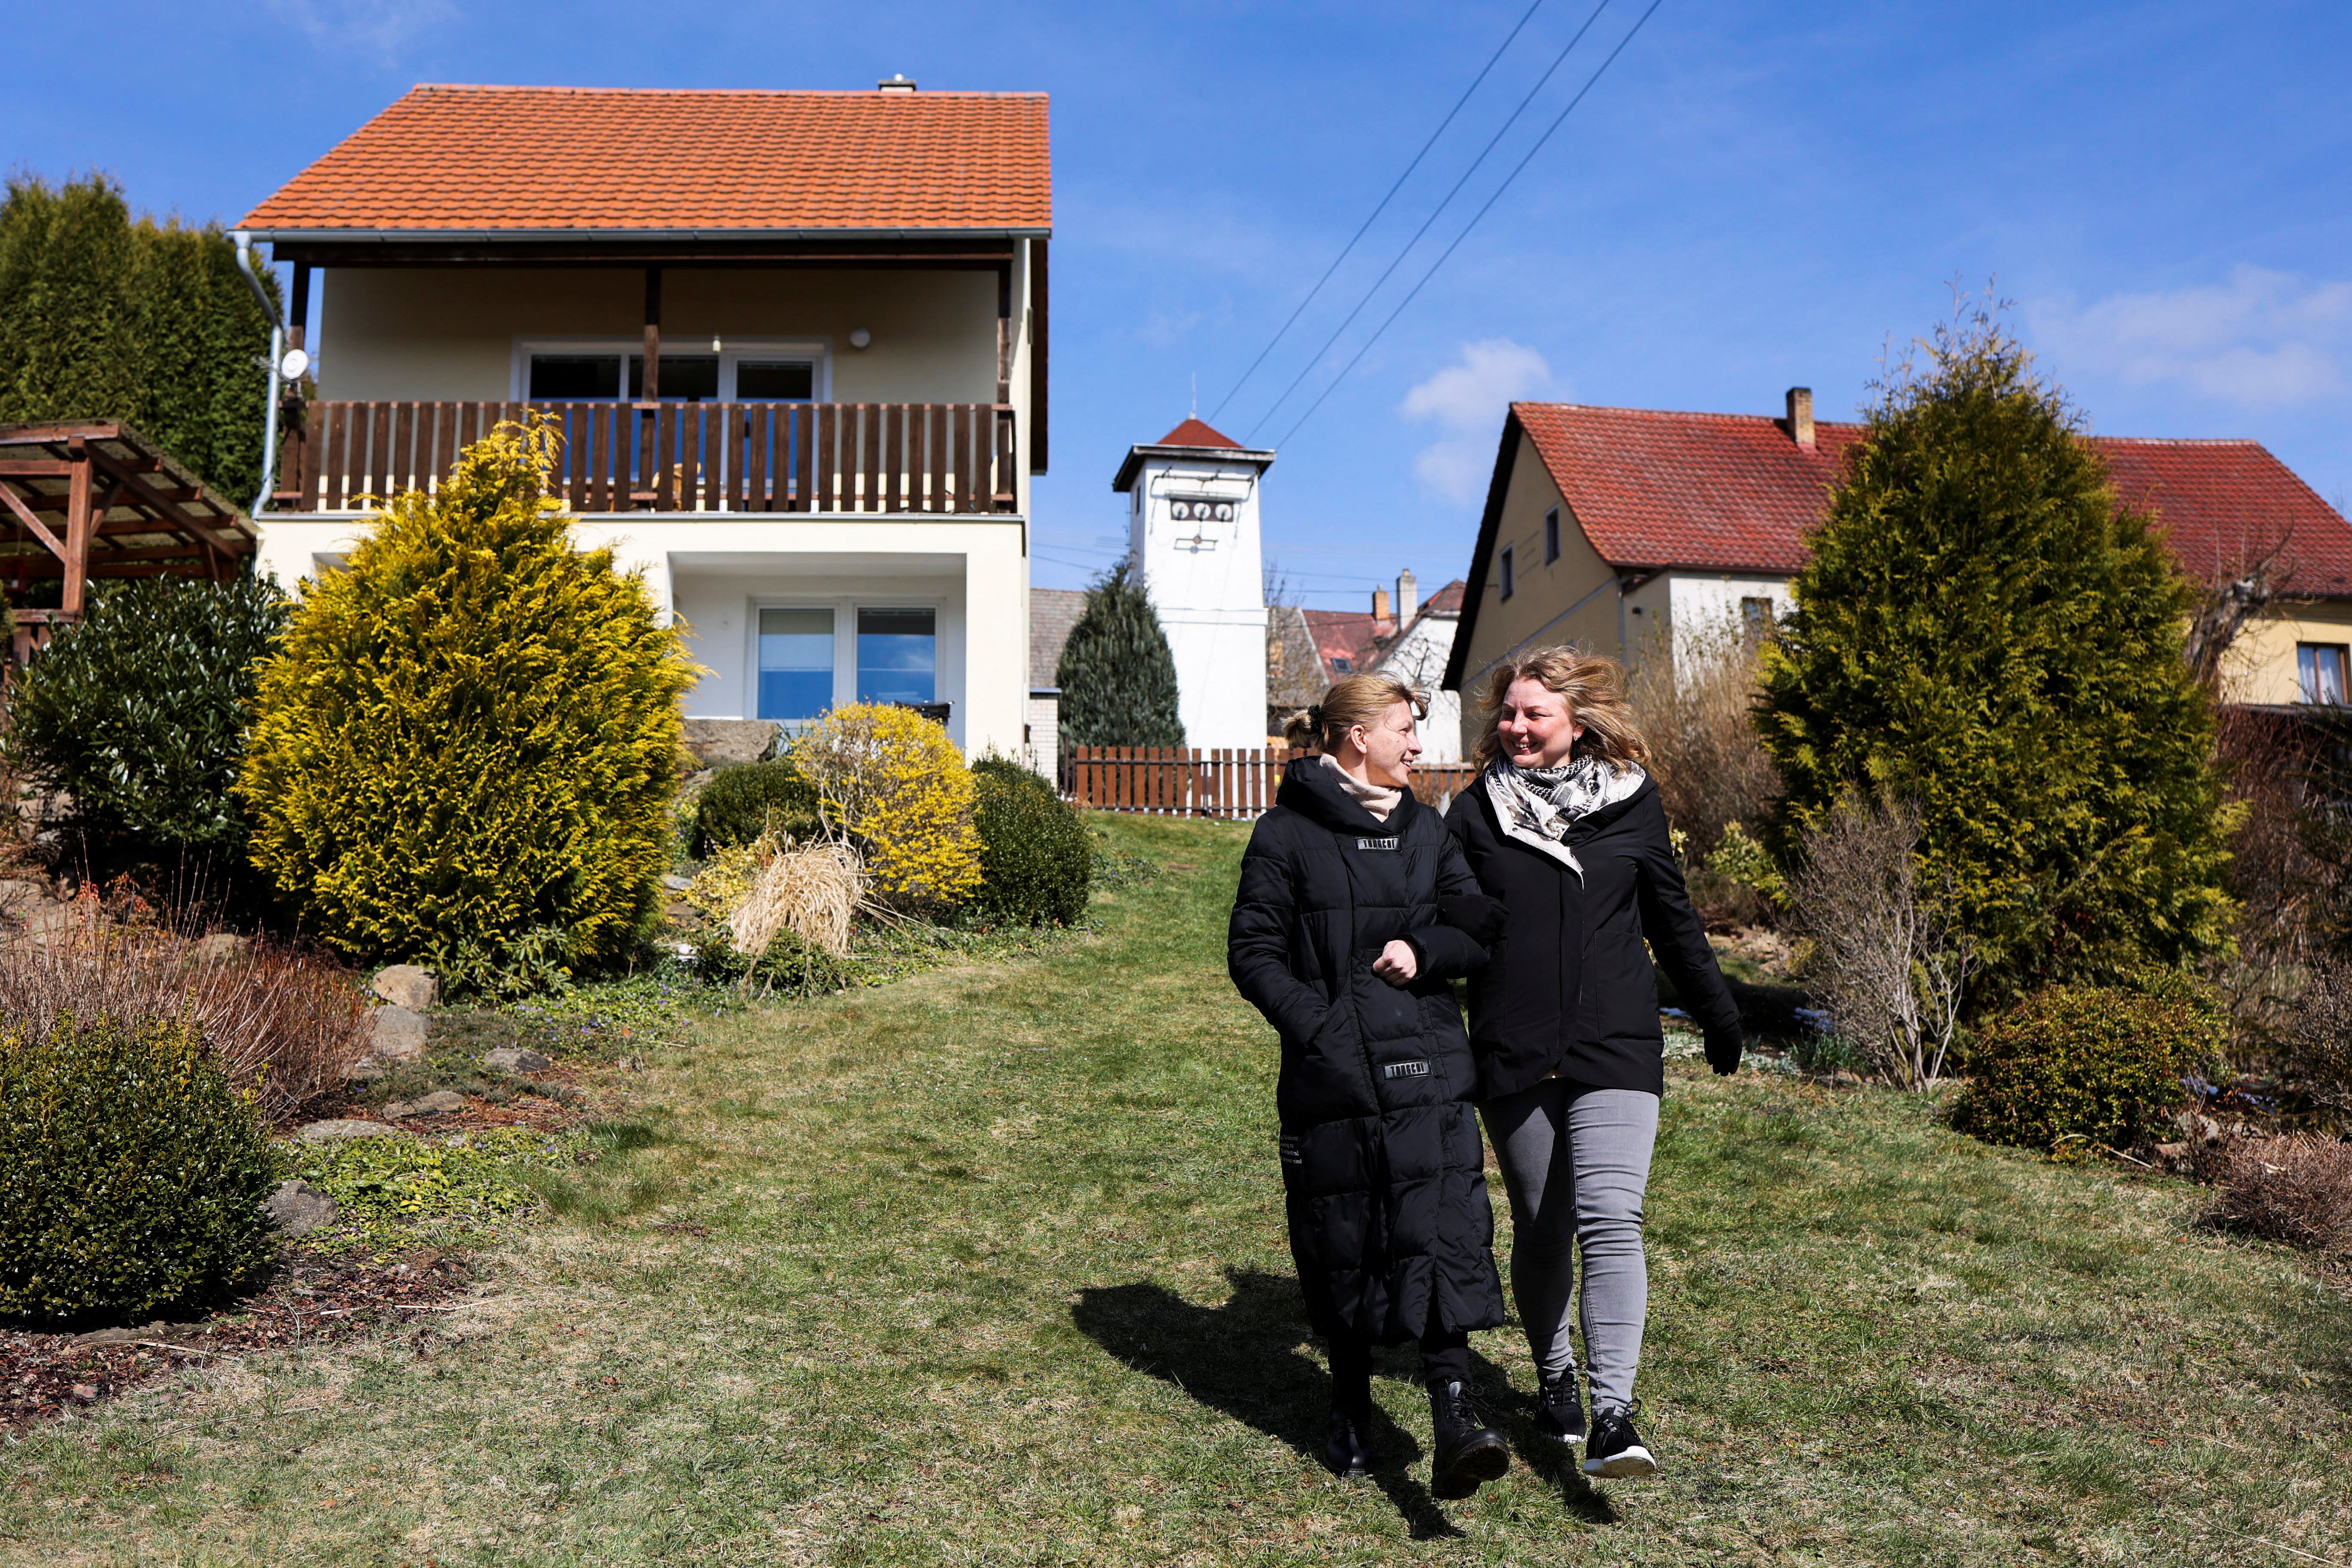 Ukrainian refugees from war-torn Mariupol adapt to small-town life in a Czech village